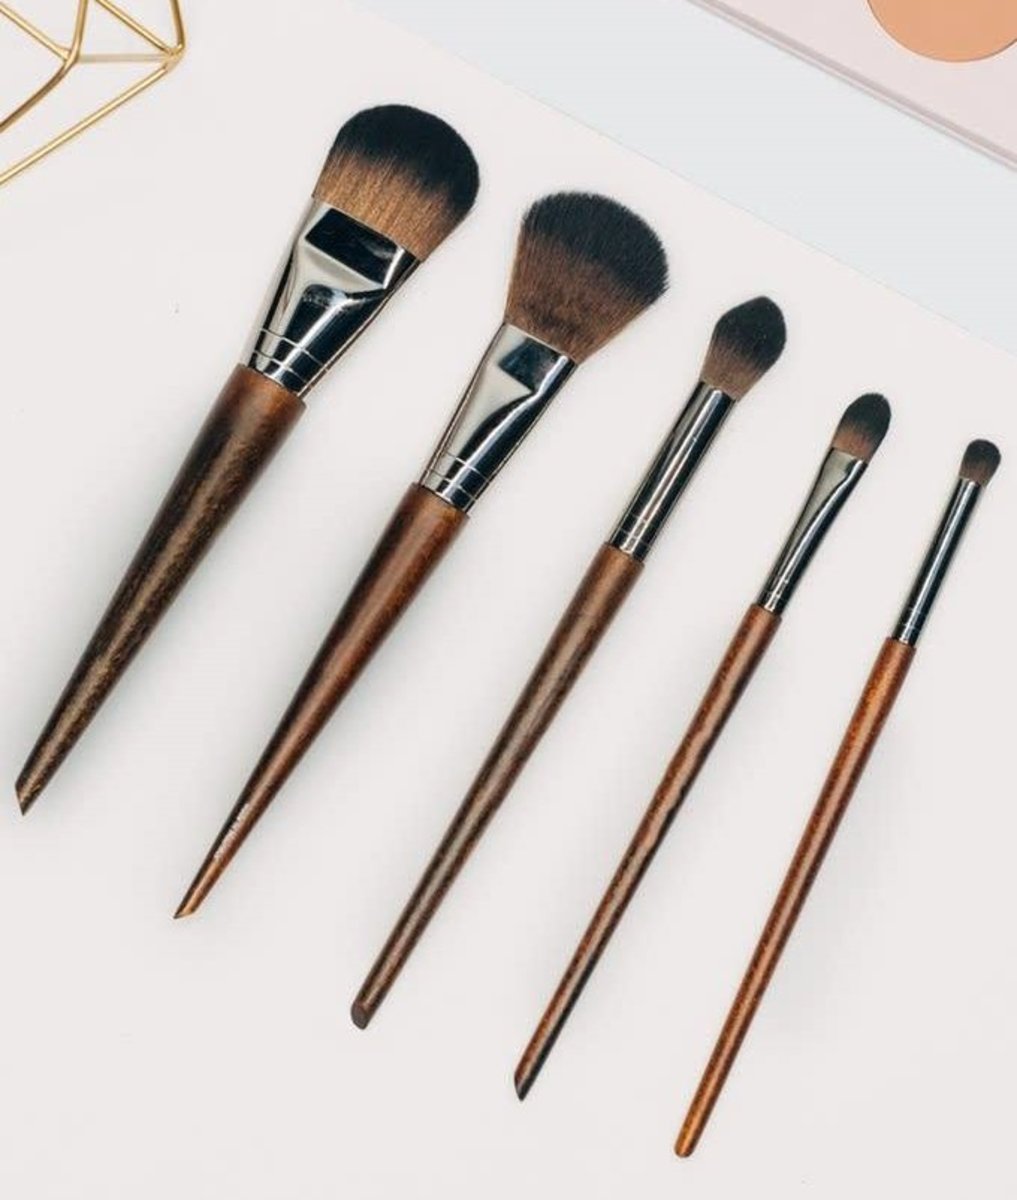 Brushean - Makeup Brush Set (5-piece brush set includes powder brush, foundation brush, blending brush, eyeshadow brush and crease brush)